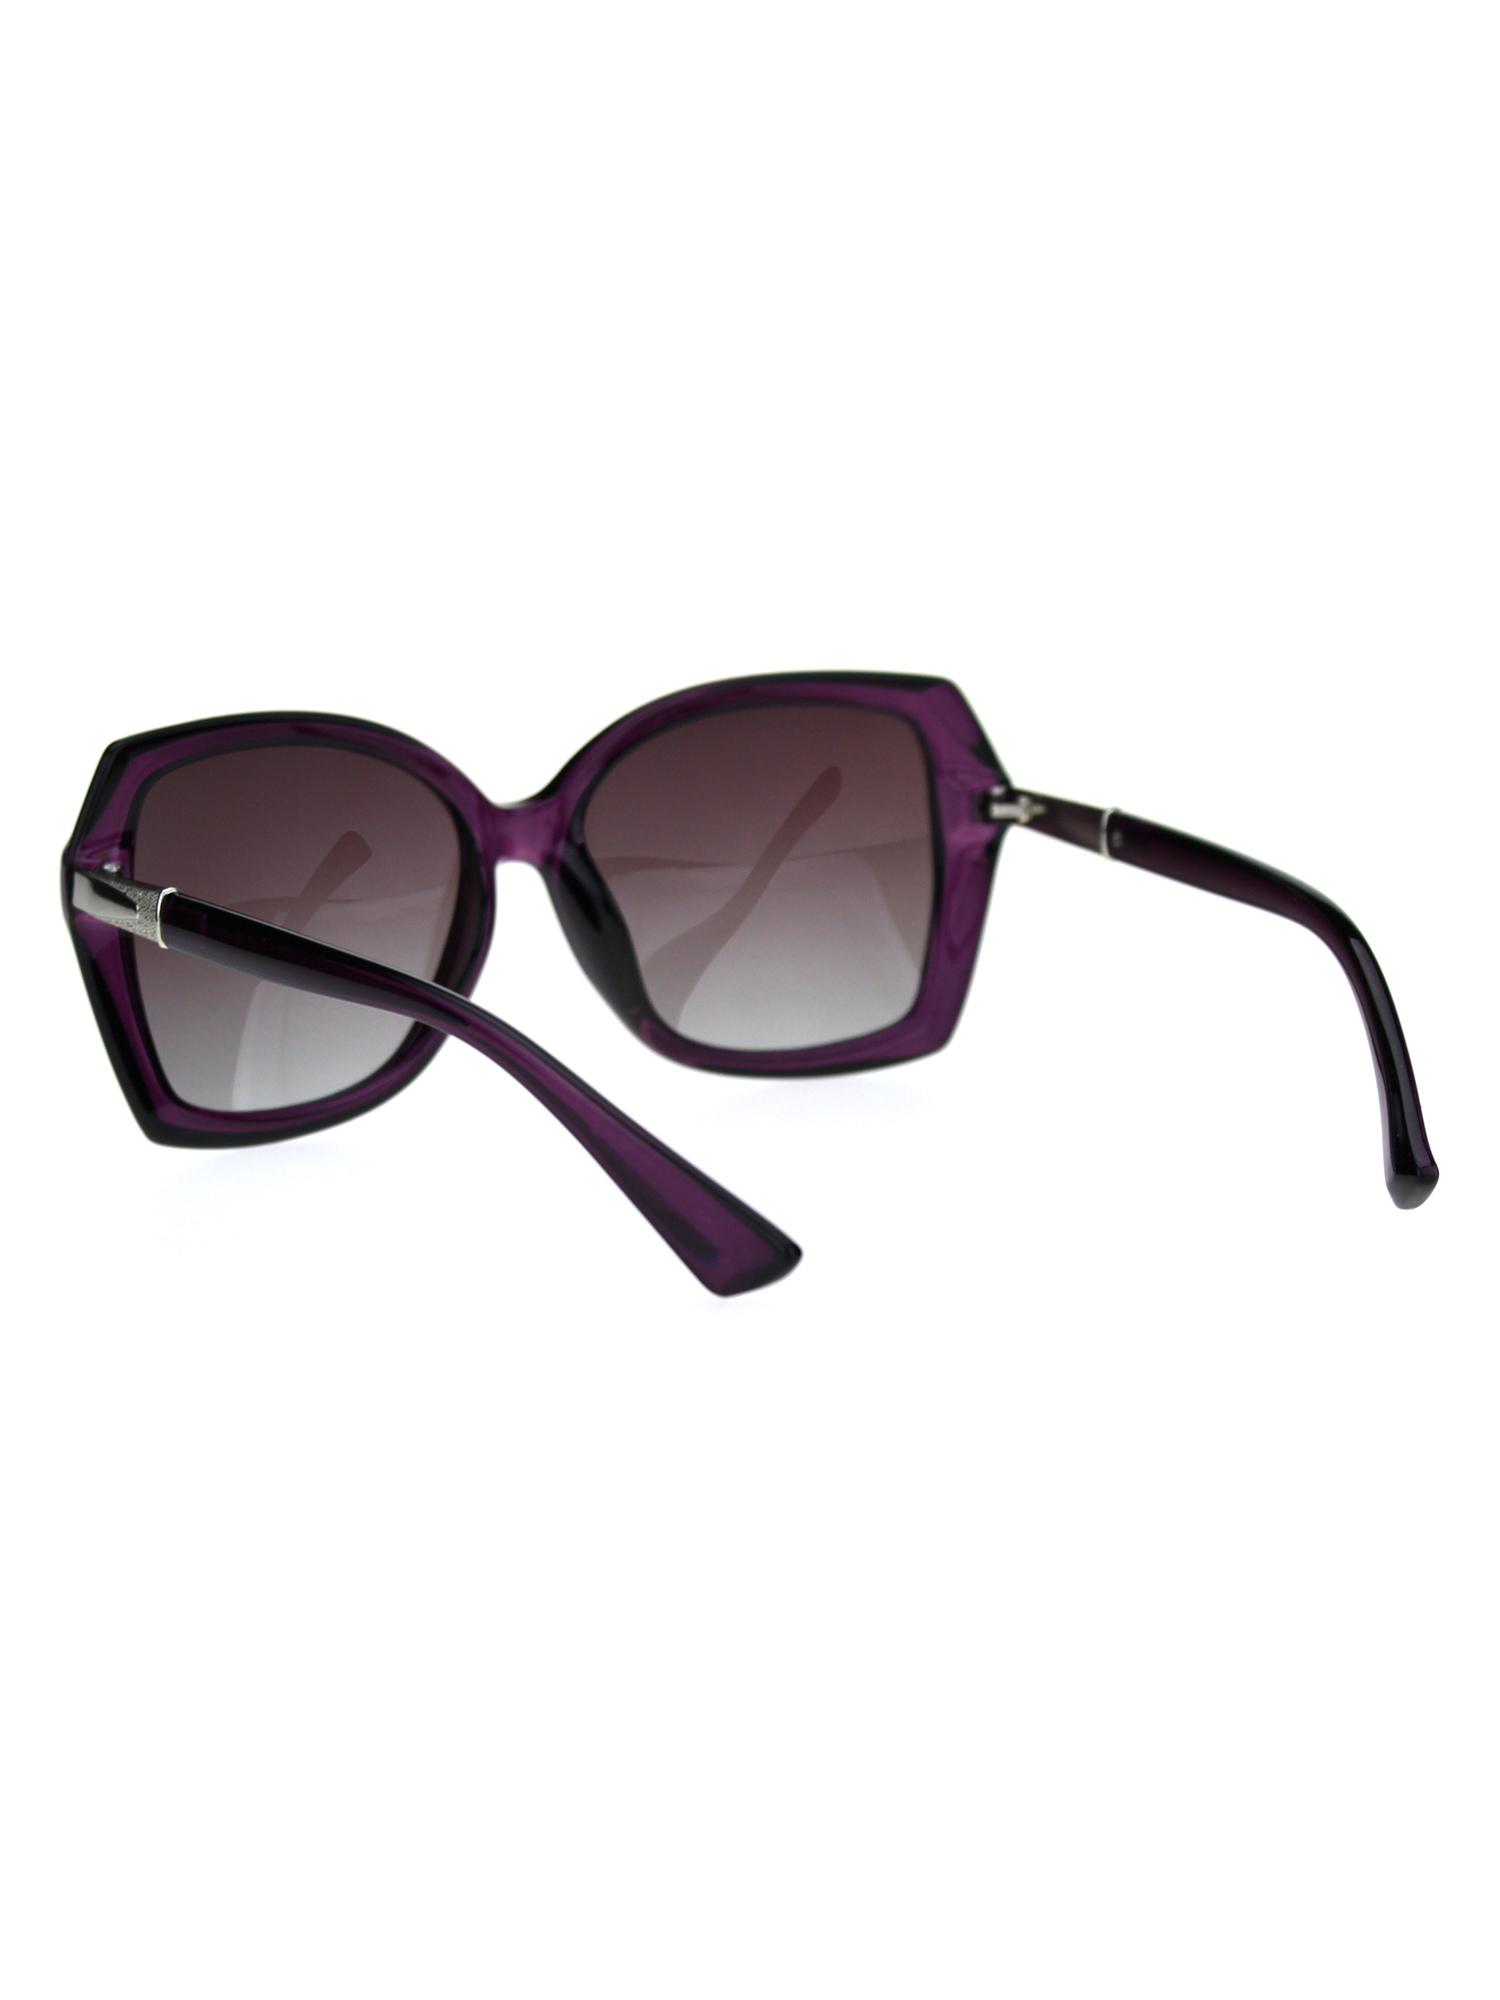 Womens CR39 Polarized Square Plastic Butterfly Designer Fashion Sunglasses All Purple - image 4 of 4